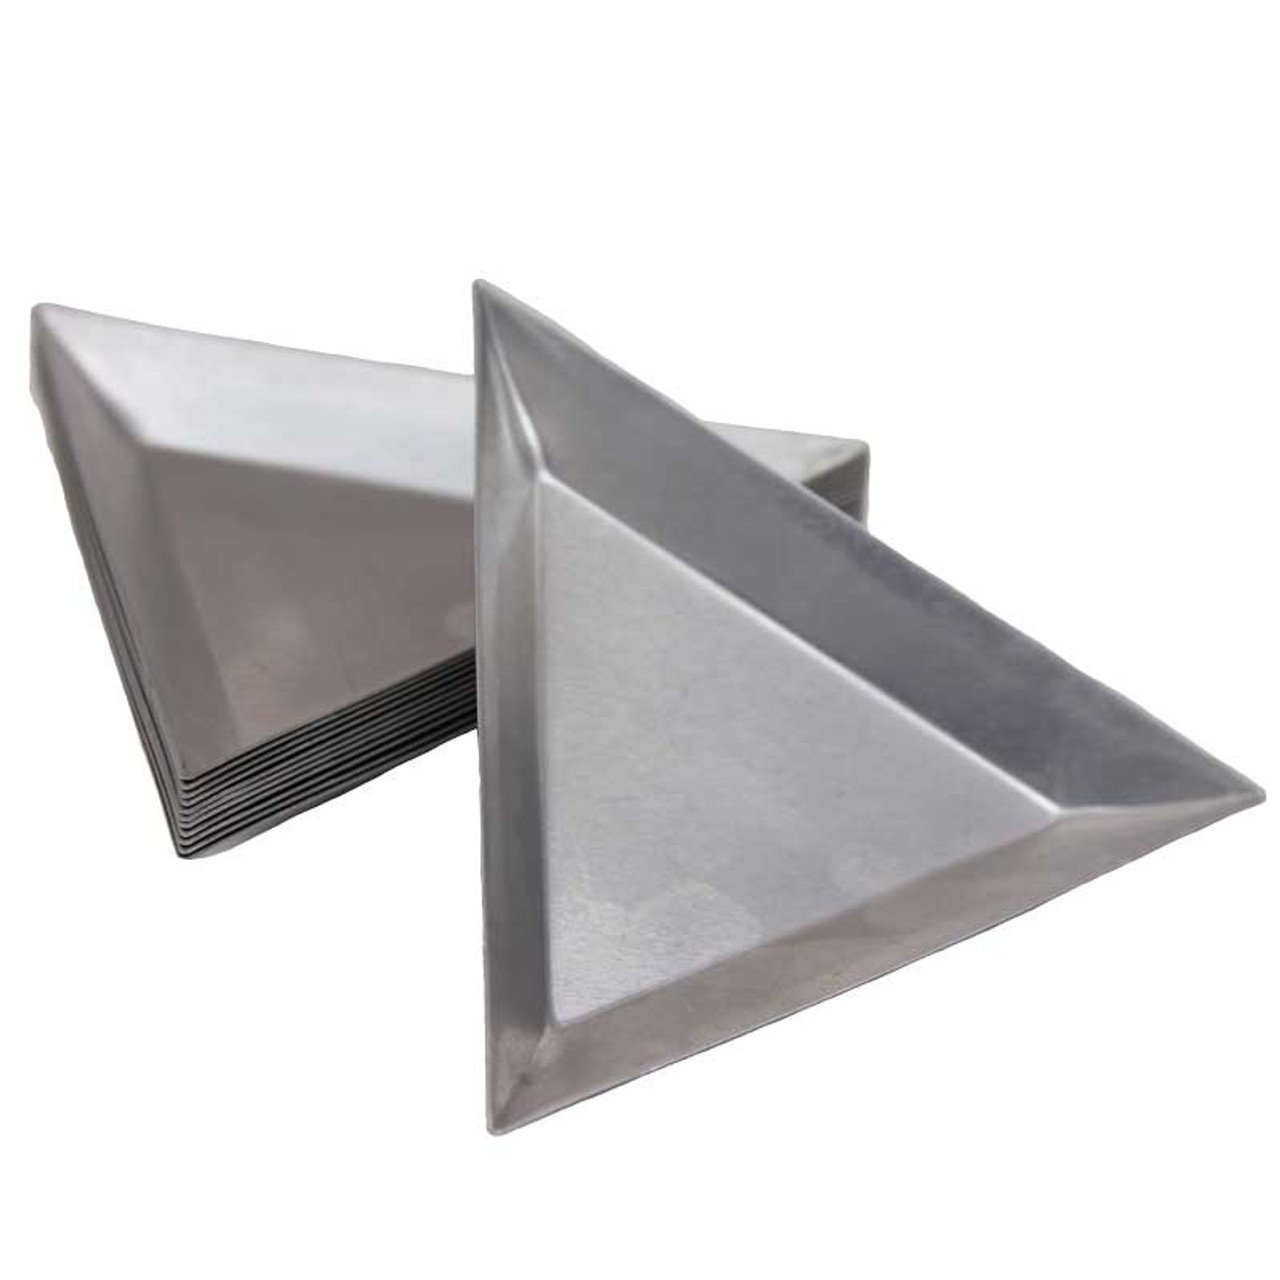 Small Triangular Aluminum Parts Trays 3.25 Inches Set of 12 Trays